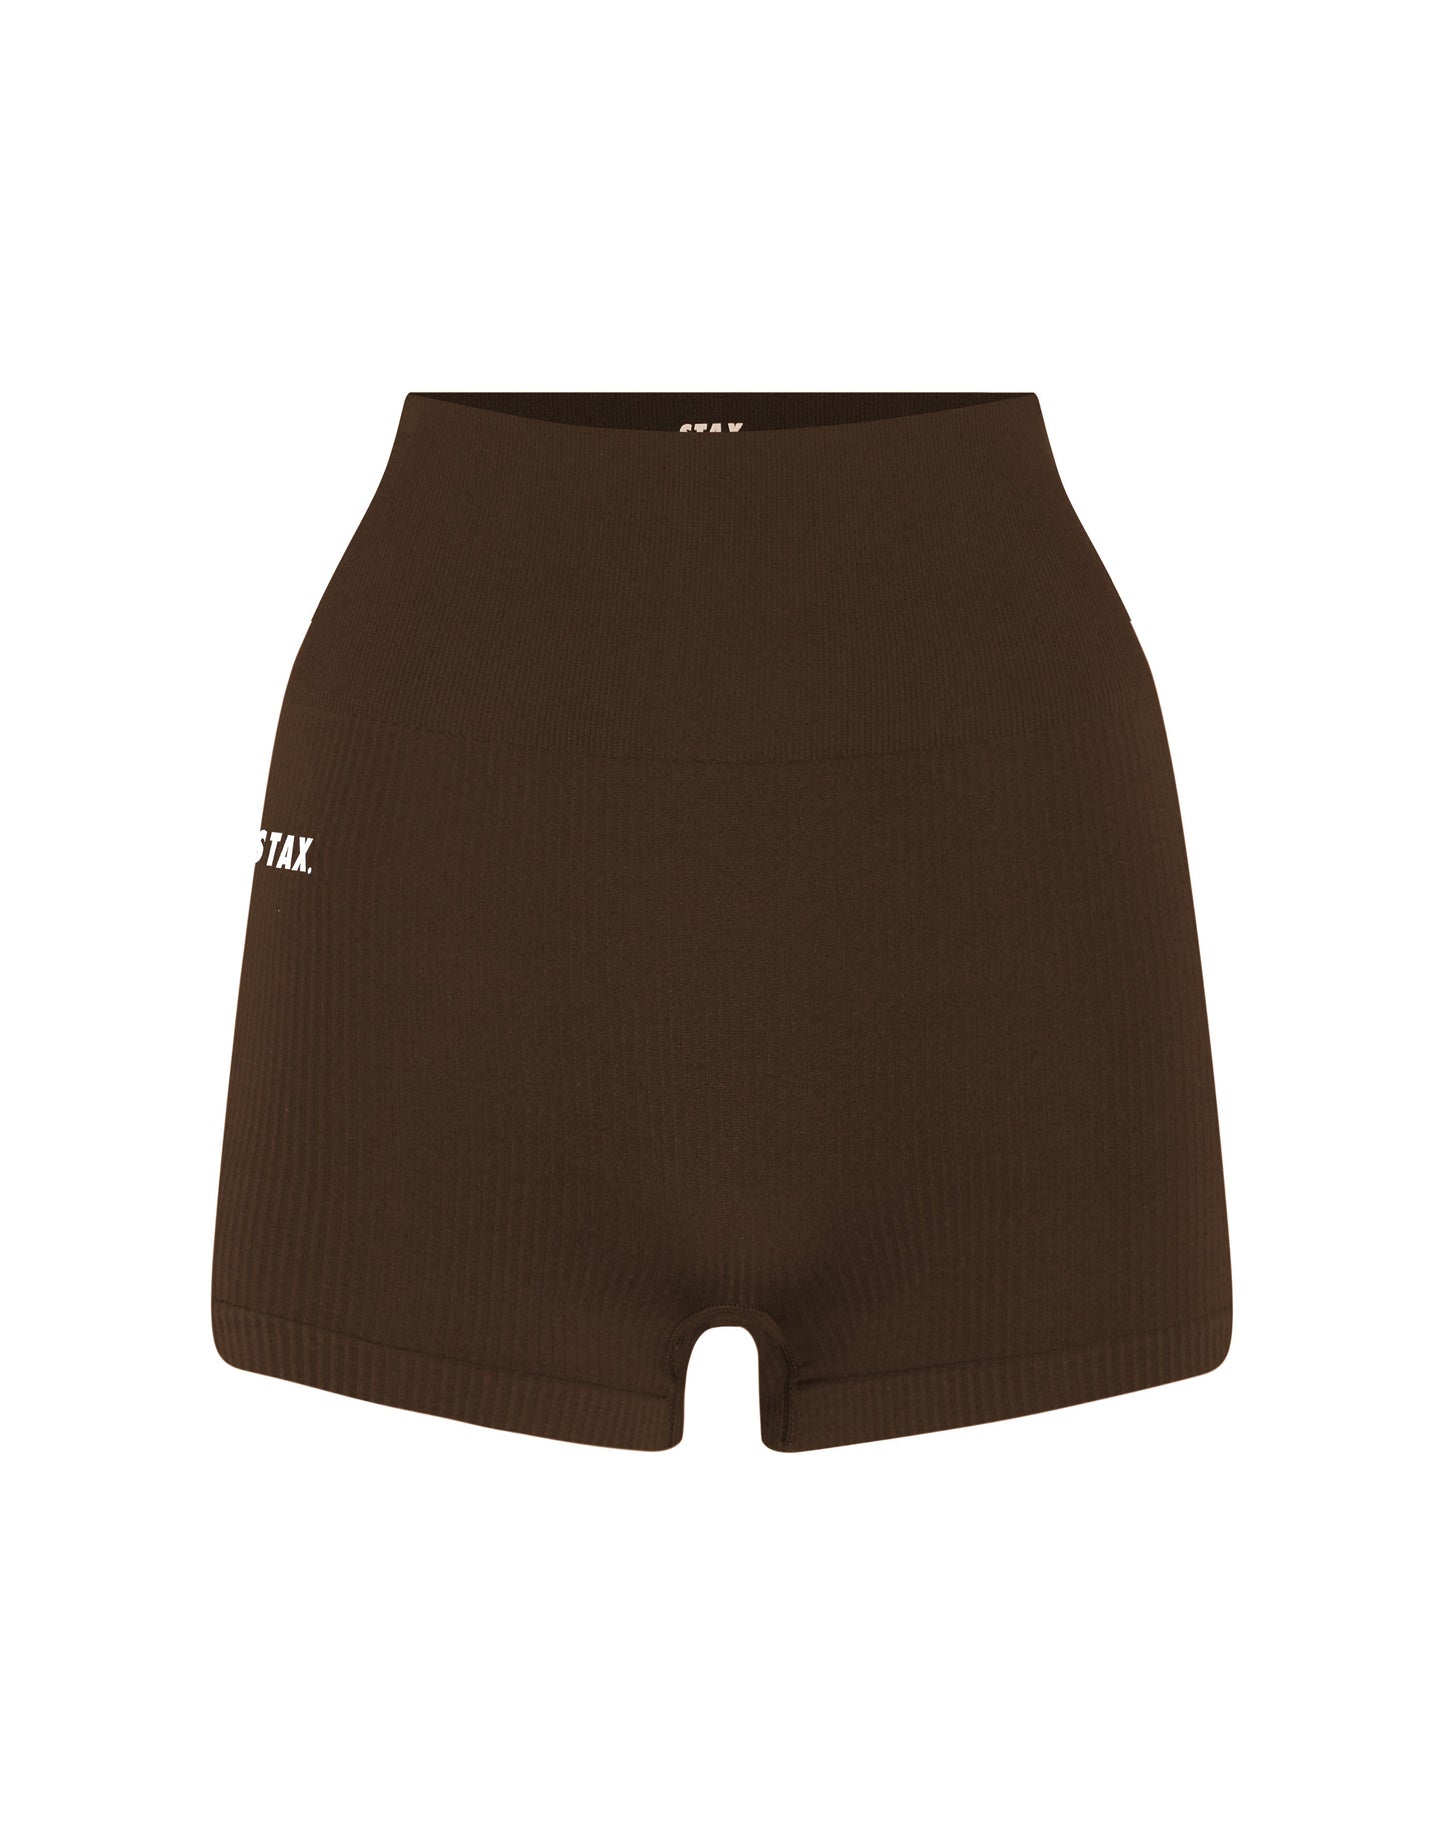 STAX. Premium Seamless V5.1 (Favourites) Mini Lounge Shorts - Bark (Dark Brown)